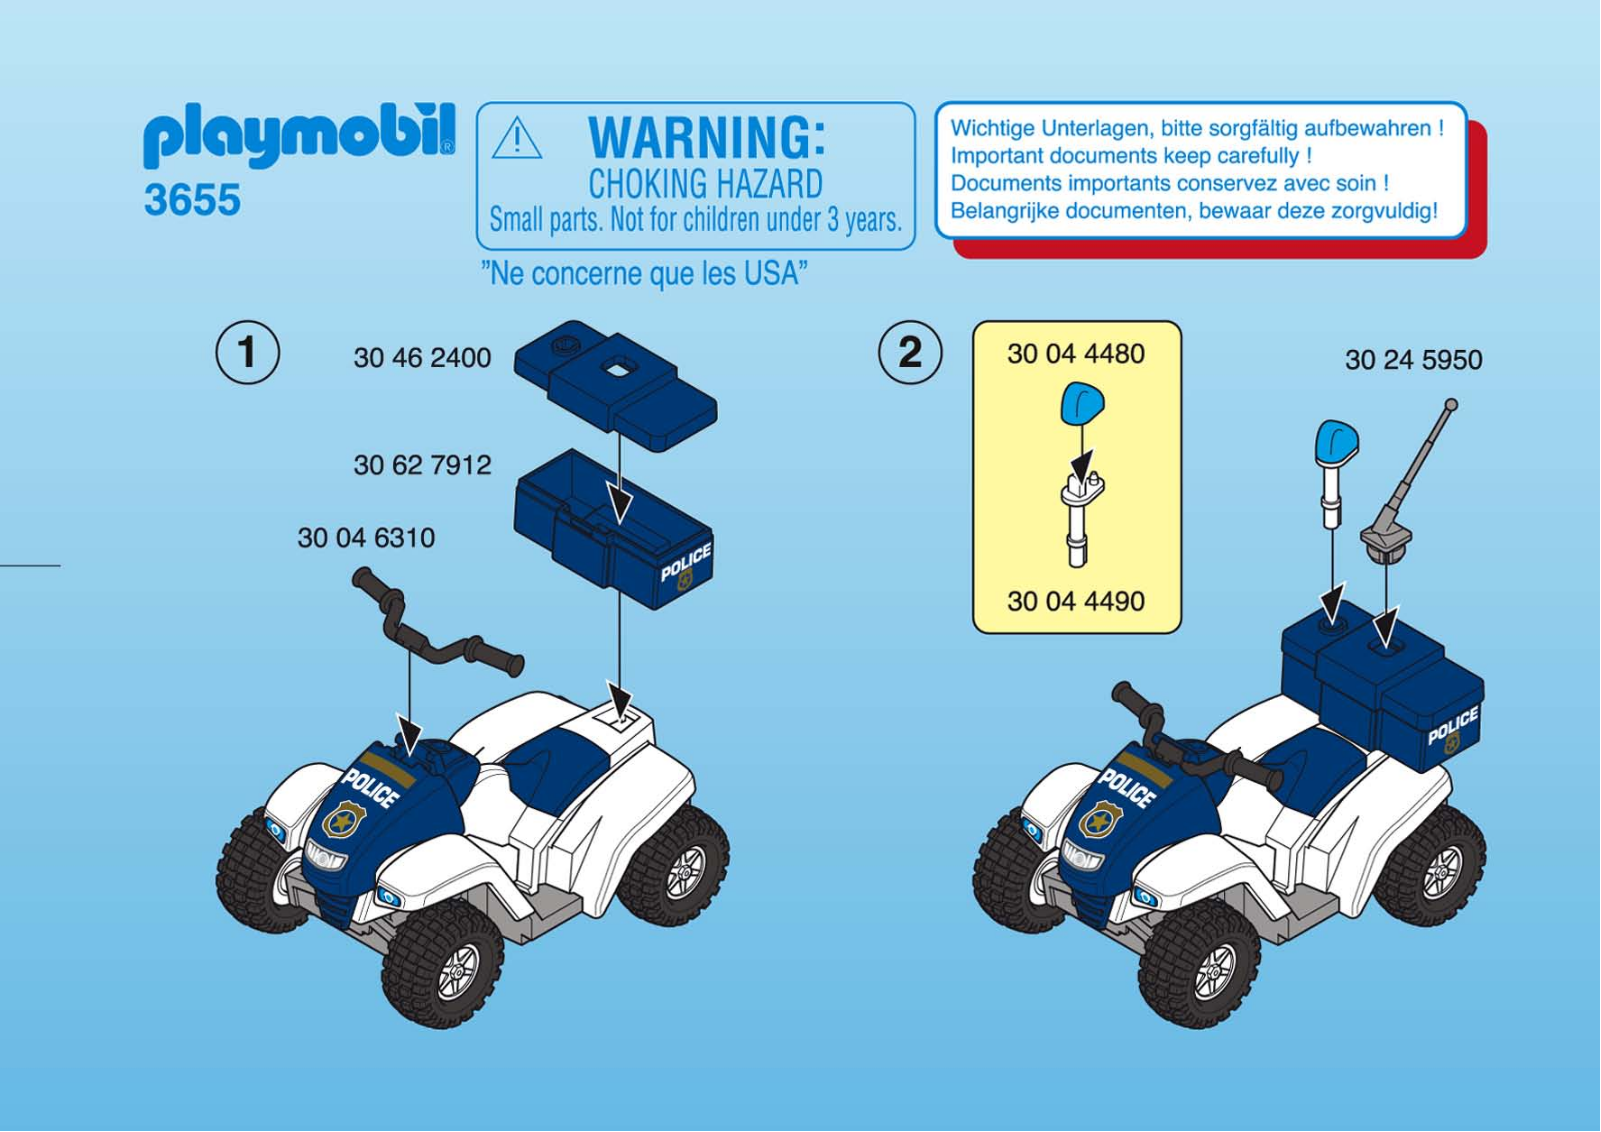 Playmobil 3655 Instructions